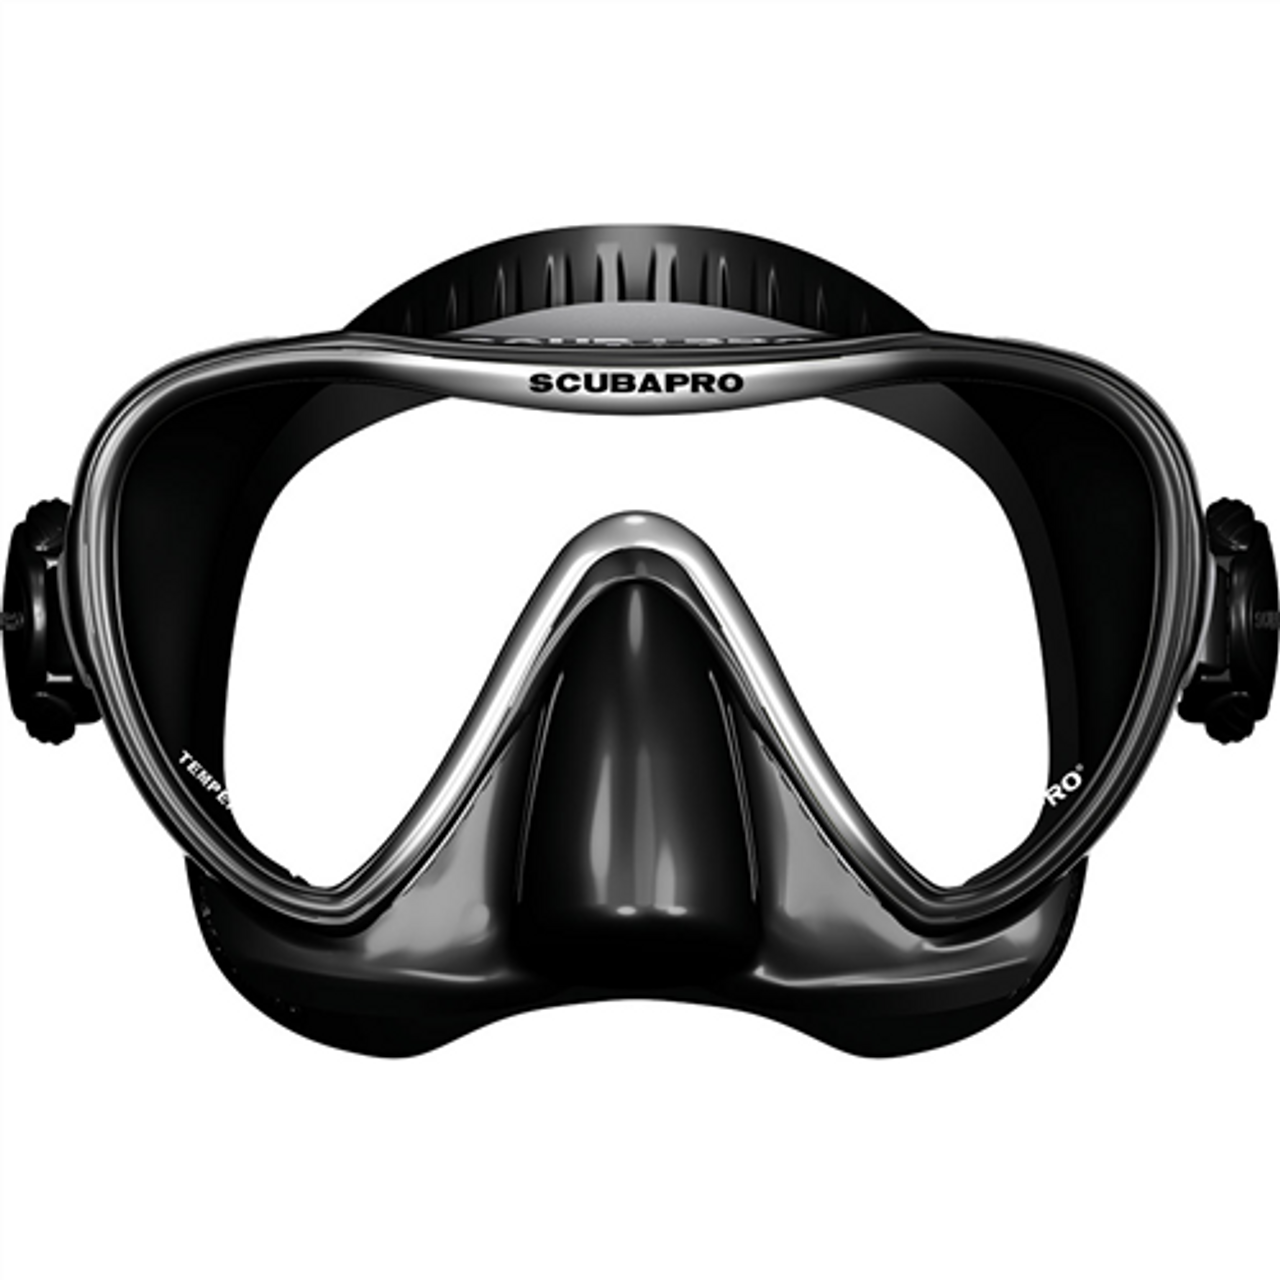 Scubapro Synergy 2 Trufit Dive Mask w/ Comfort Strap Black/Silver